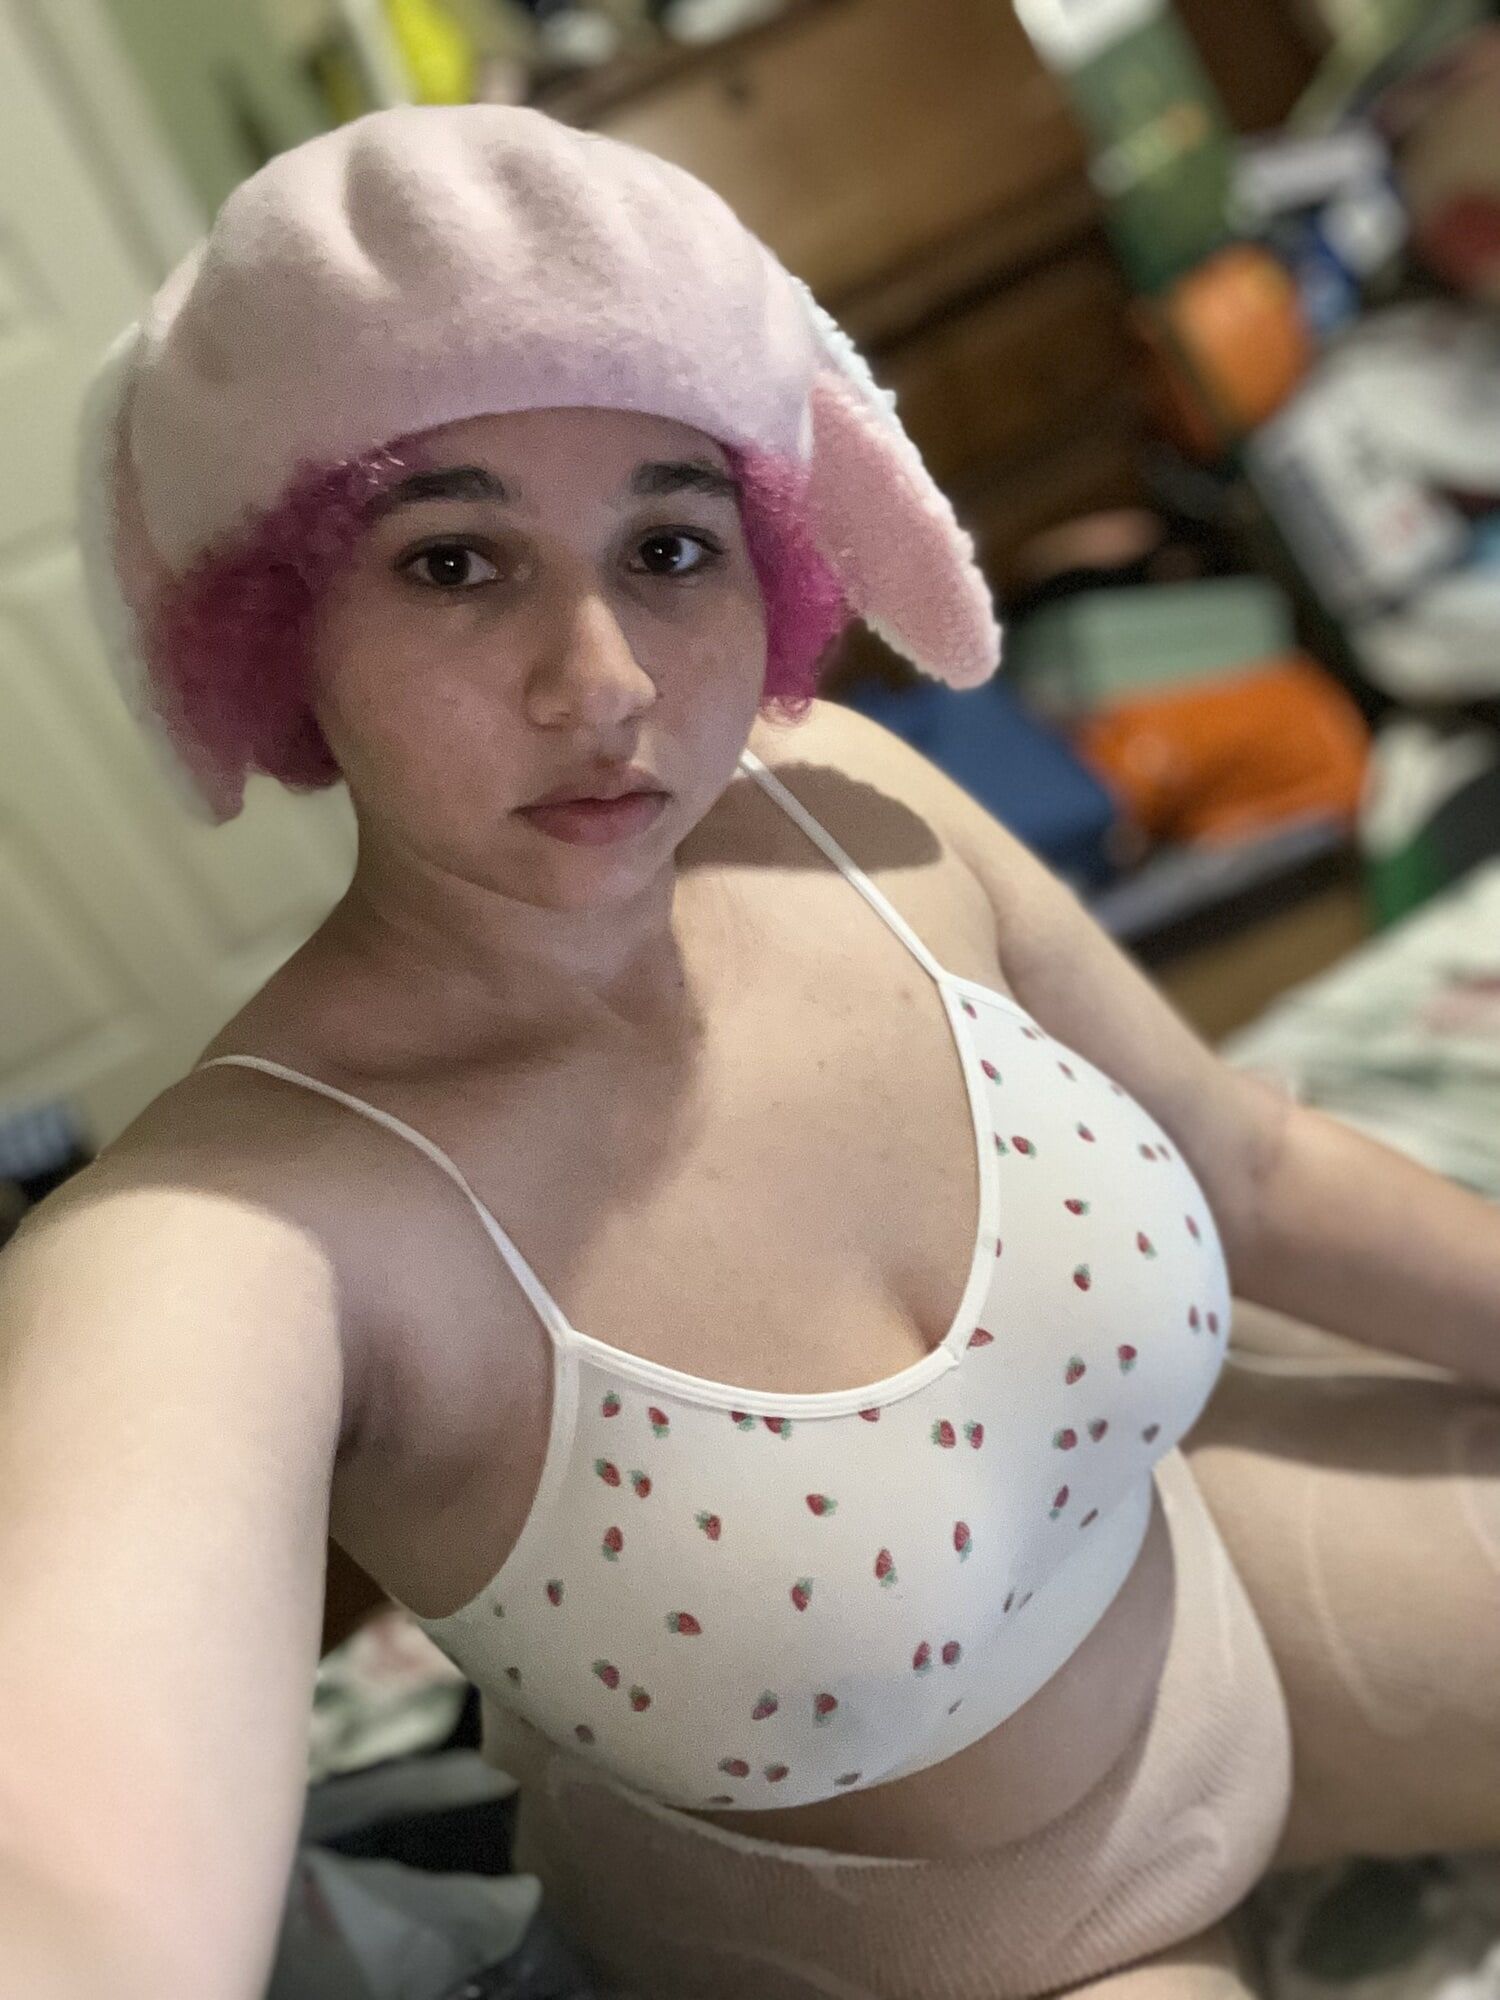 Chubby Bunny girl slut #21